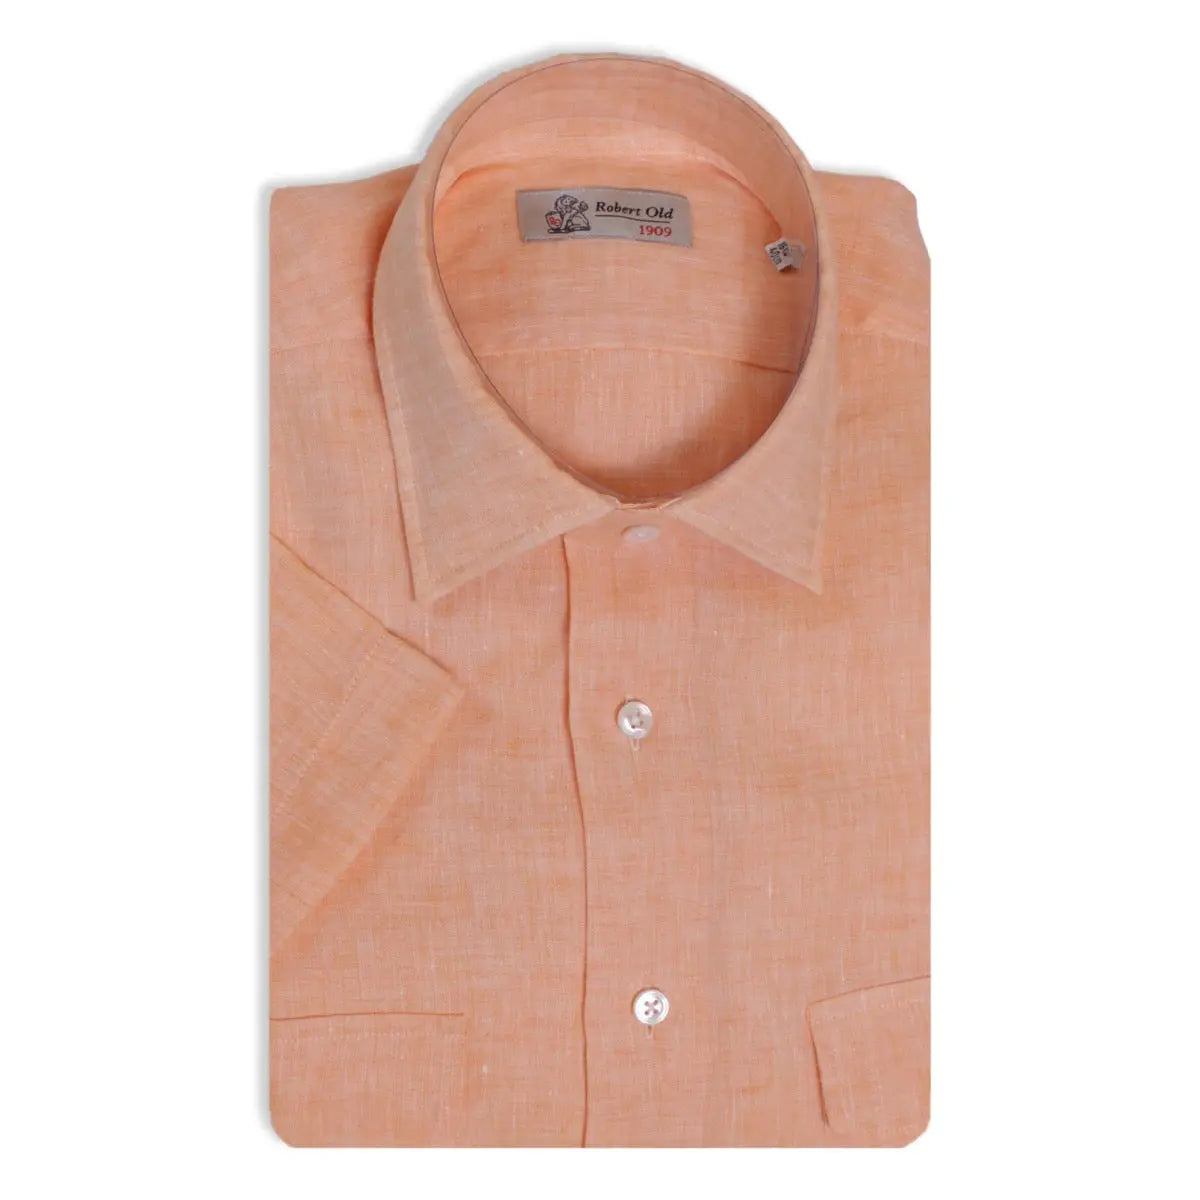 Orange Pure Italian Linen Short-Sleeve Shirt  Robert Old   